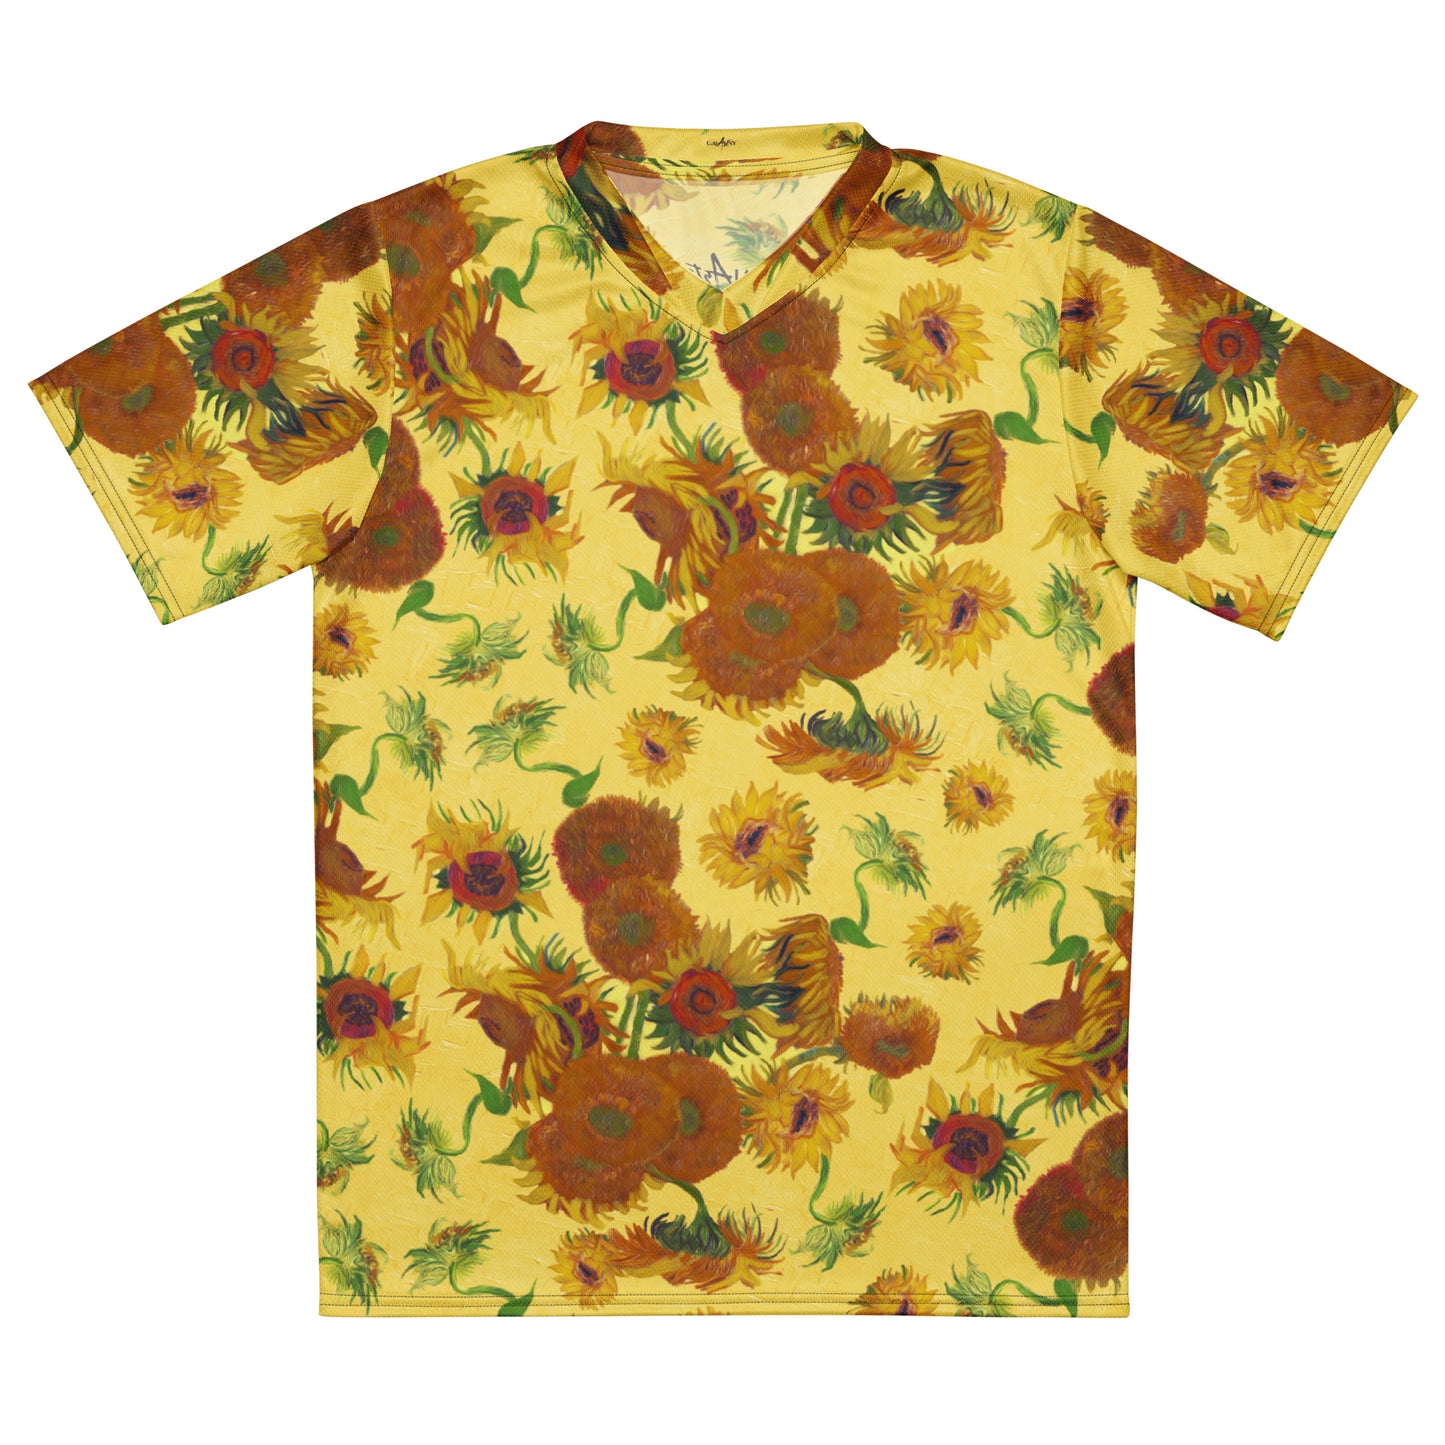 Sunflowers unisex sports jersey